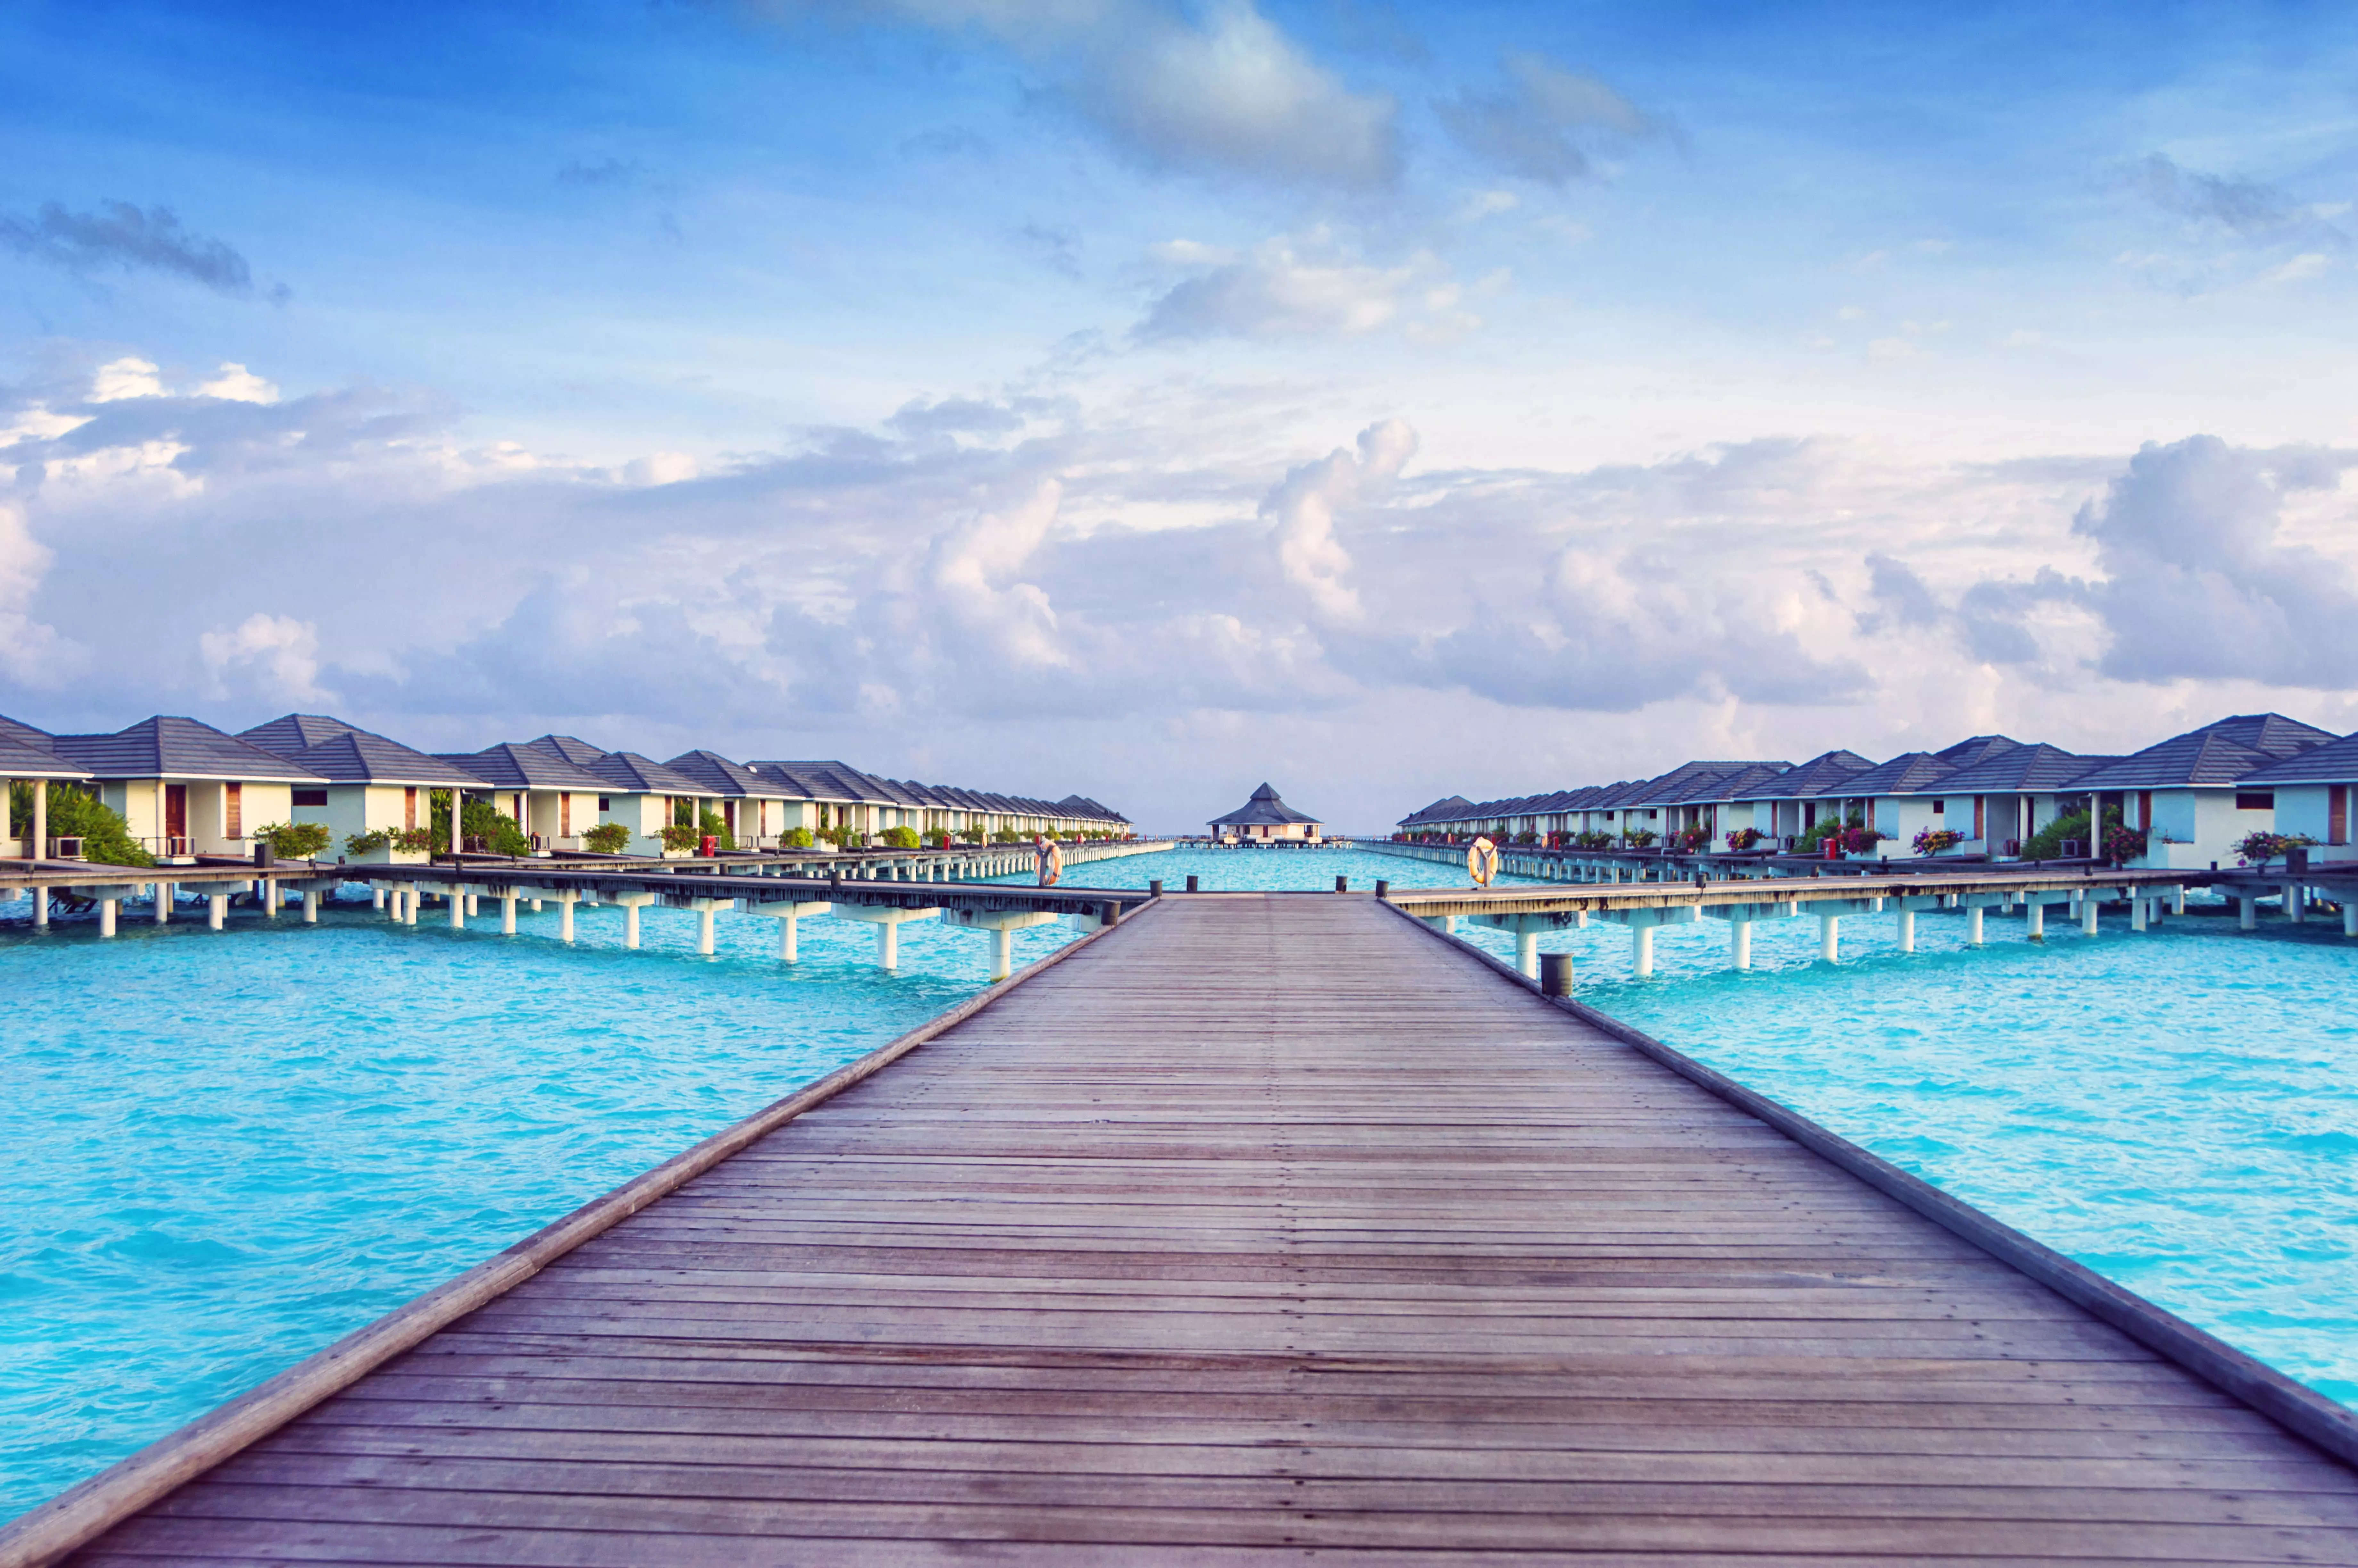 Visit Maldives to soak up the sun this summer